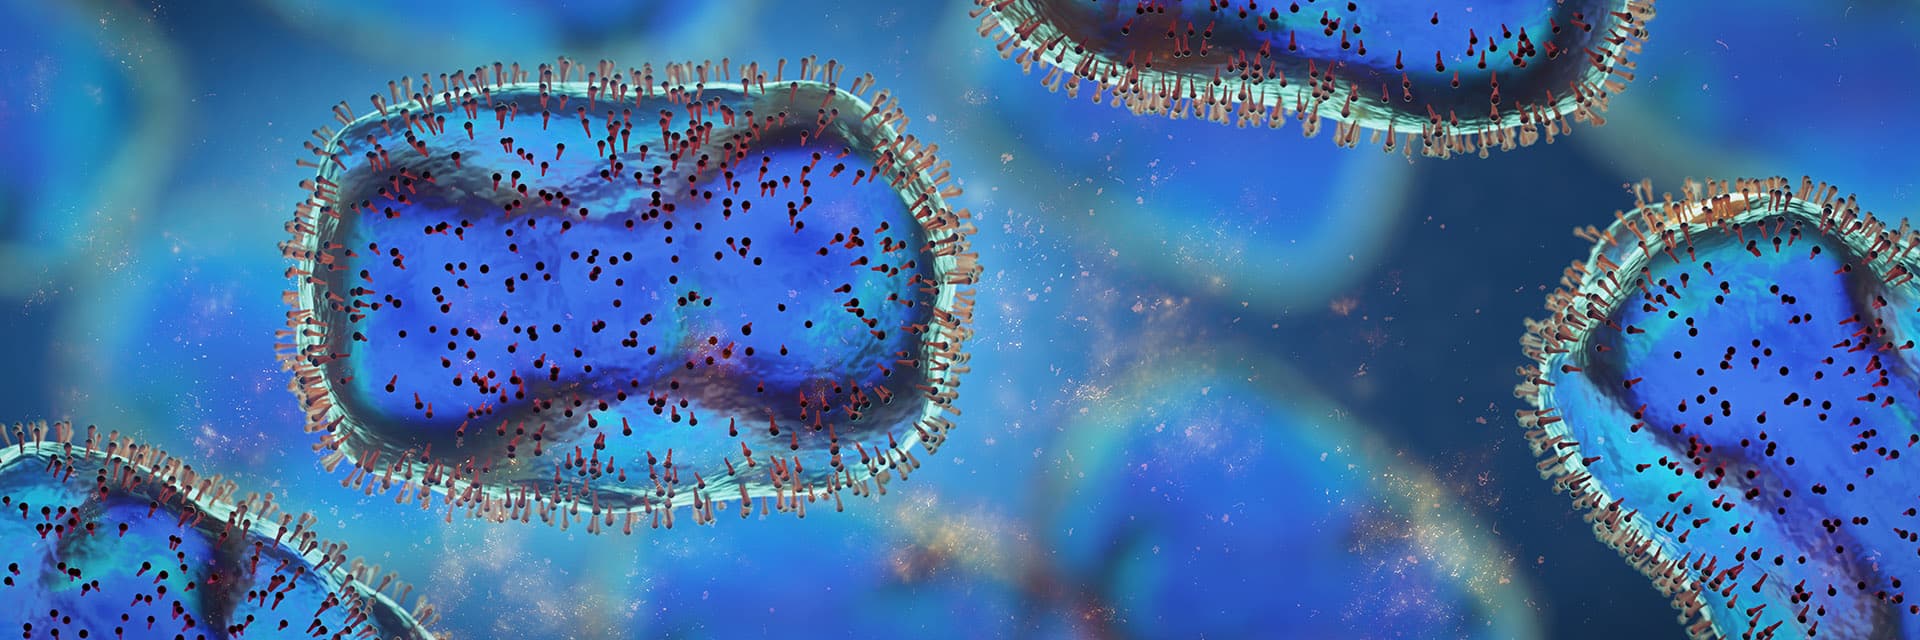 Monkeypox viruses, pathogen closeup, infectious zoonotic disease, background banner format